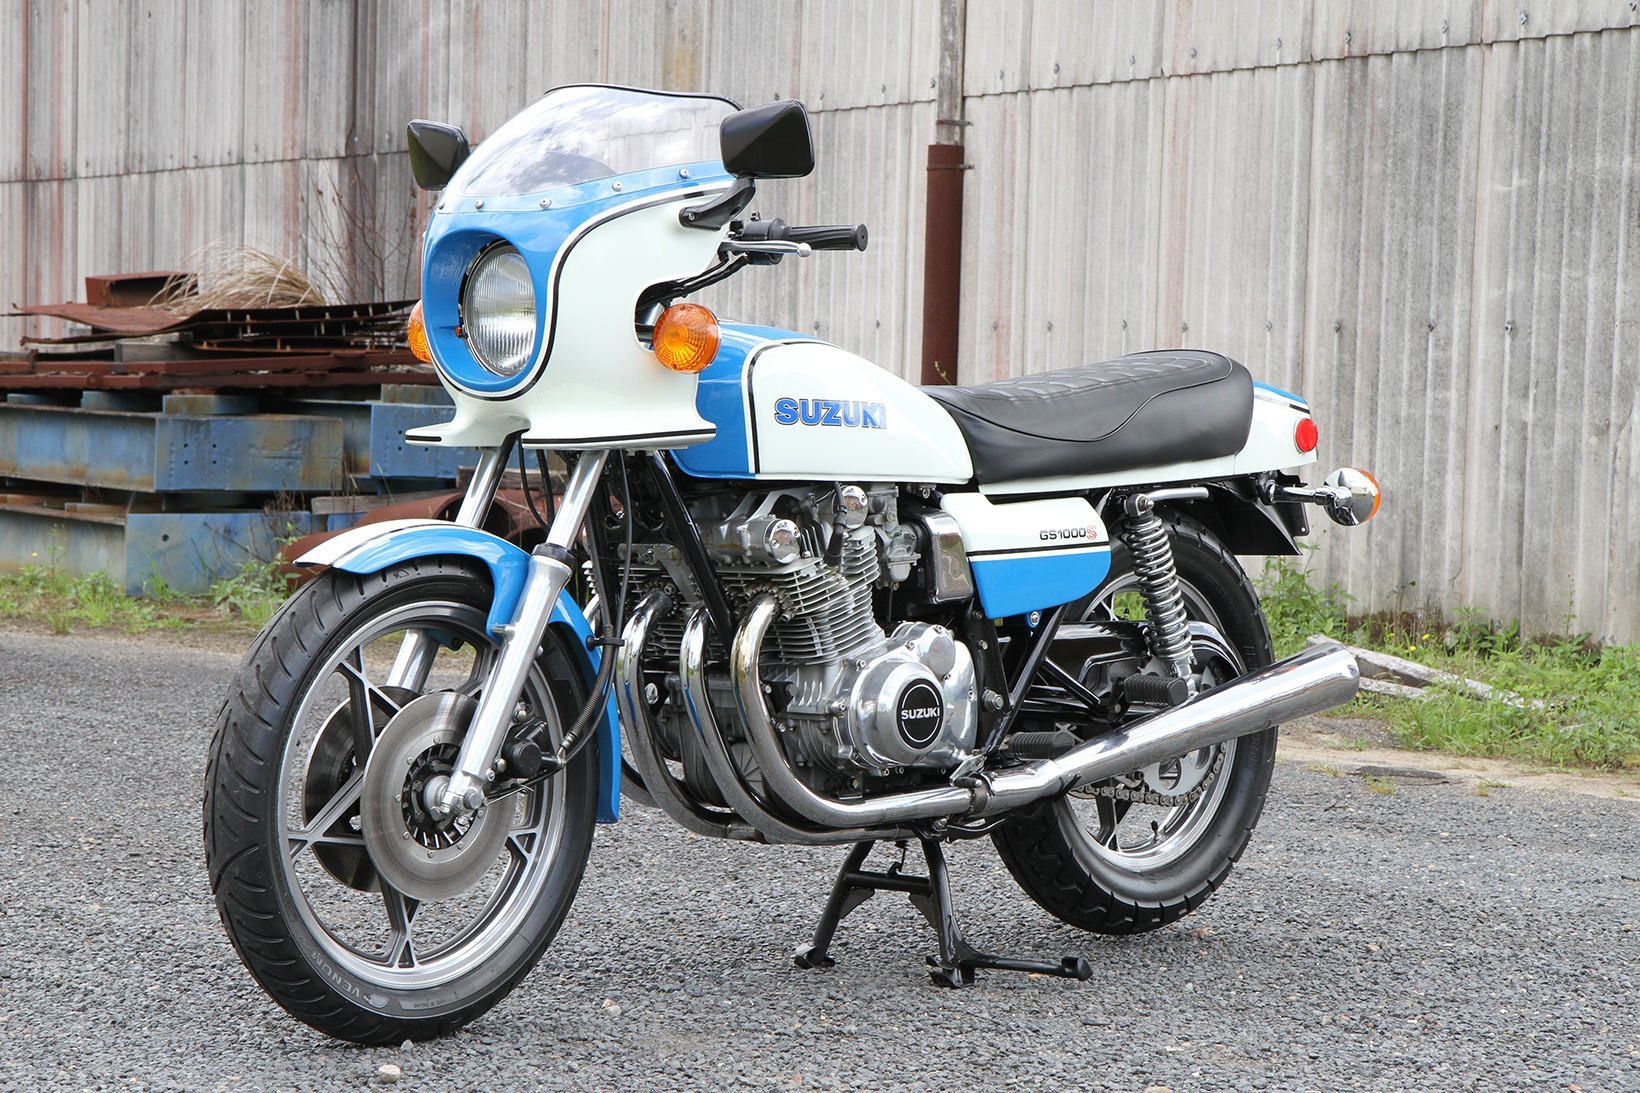 1979 Suzuki GS1000 Racing Superbike Wes Cooley Edition